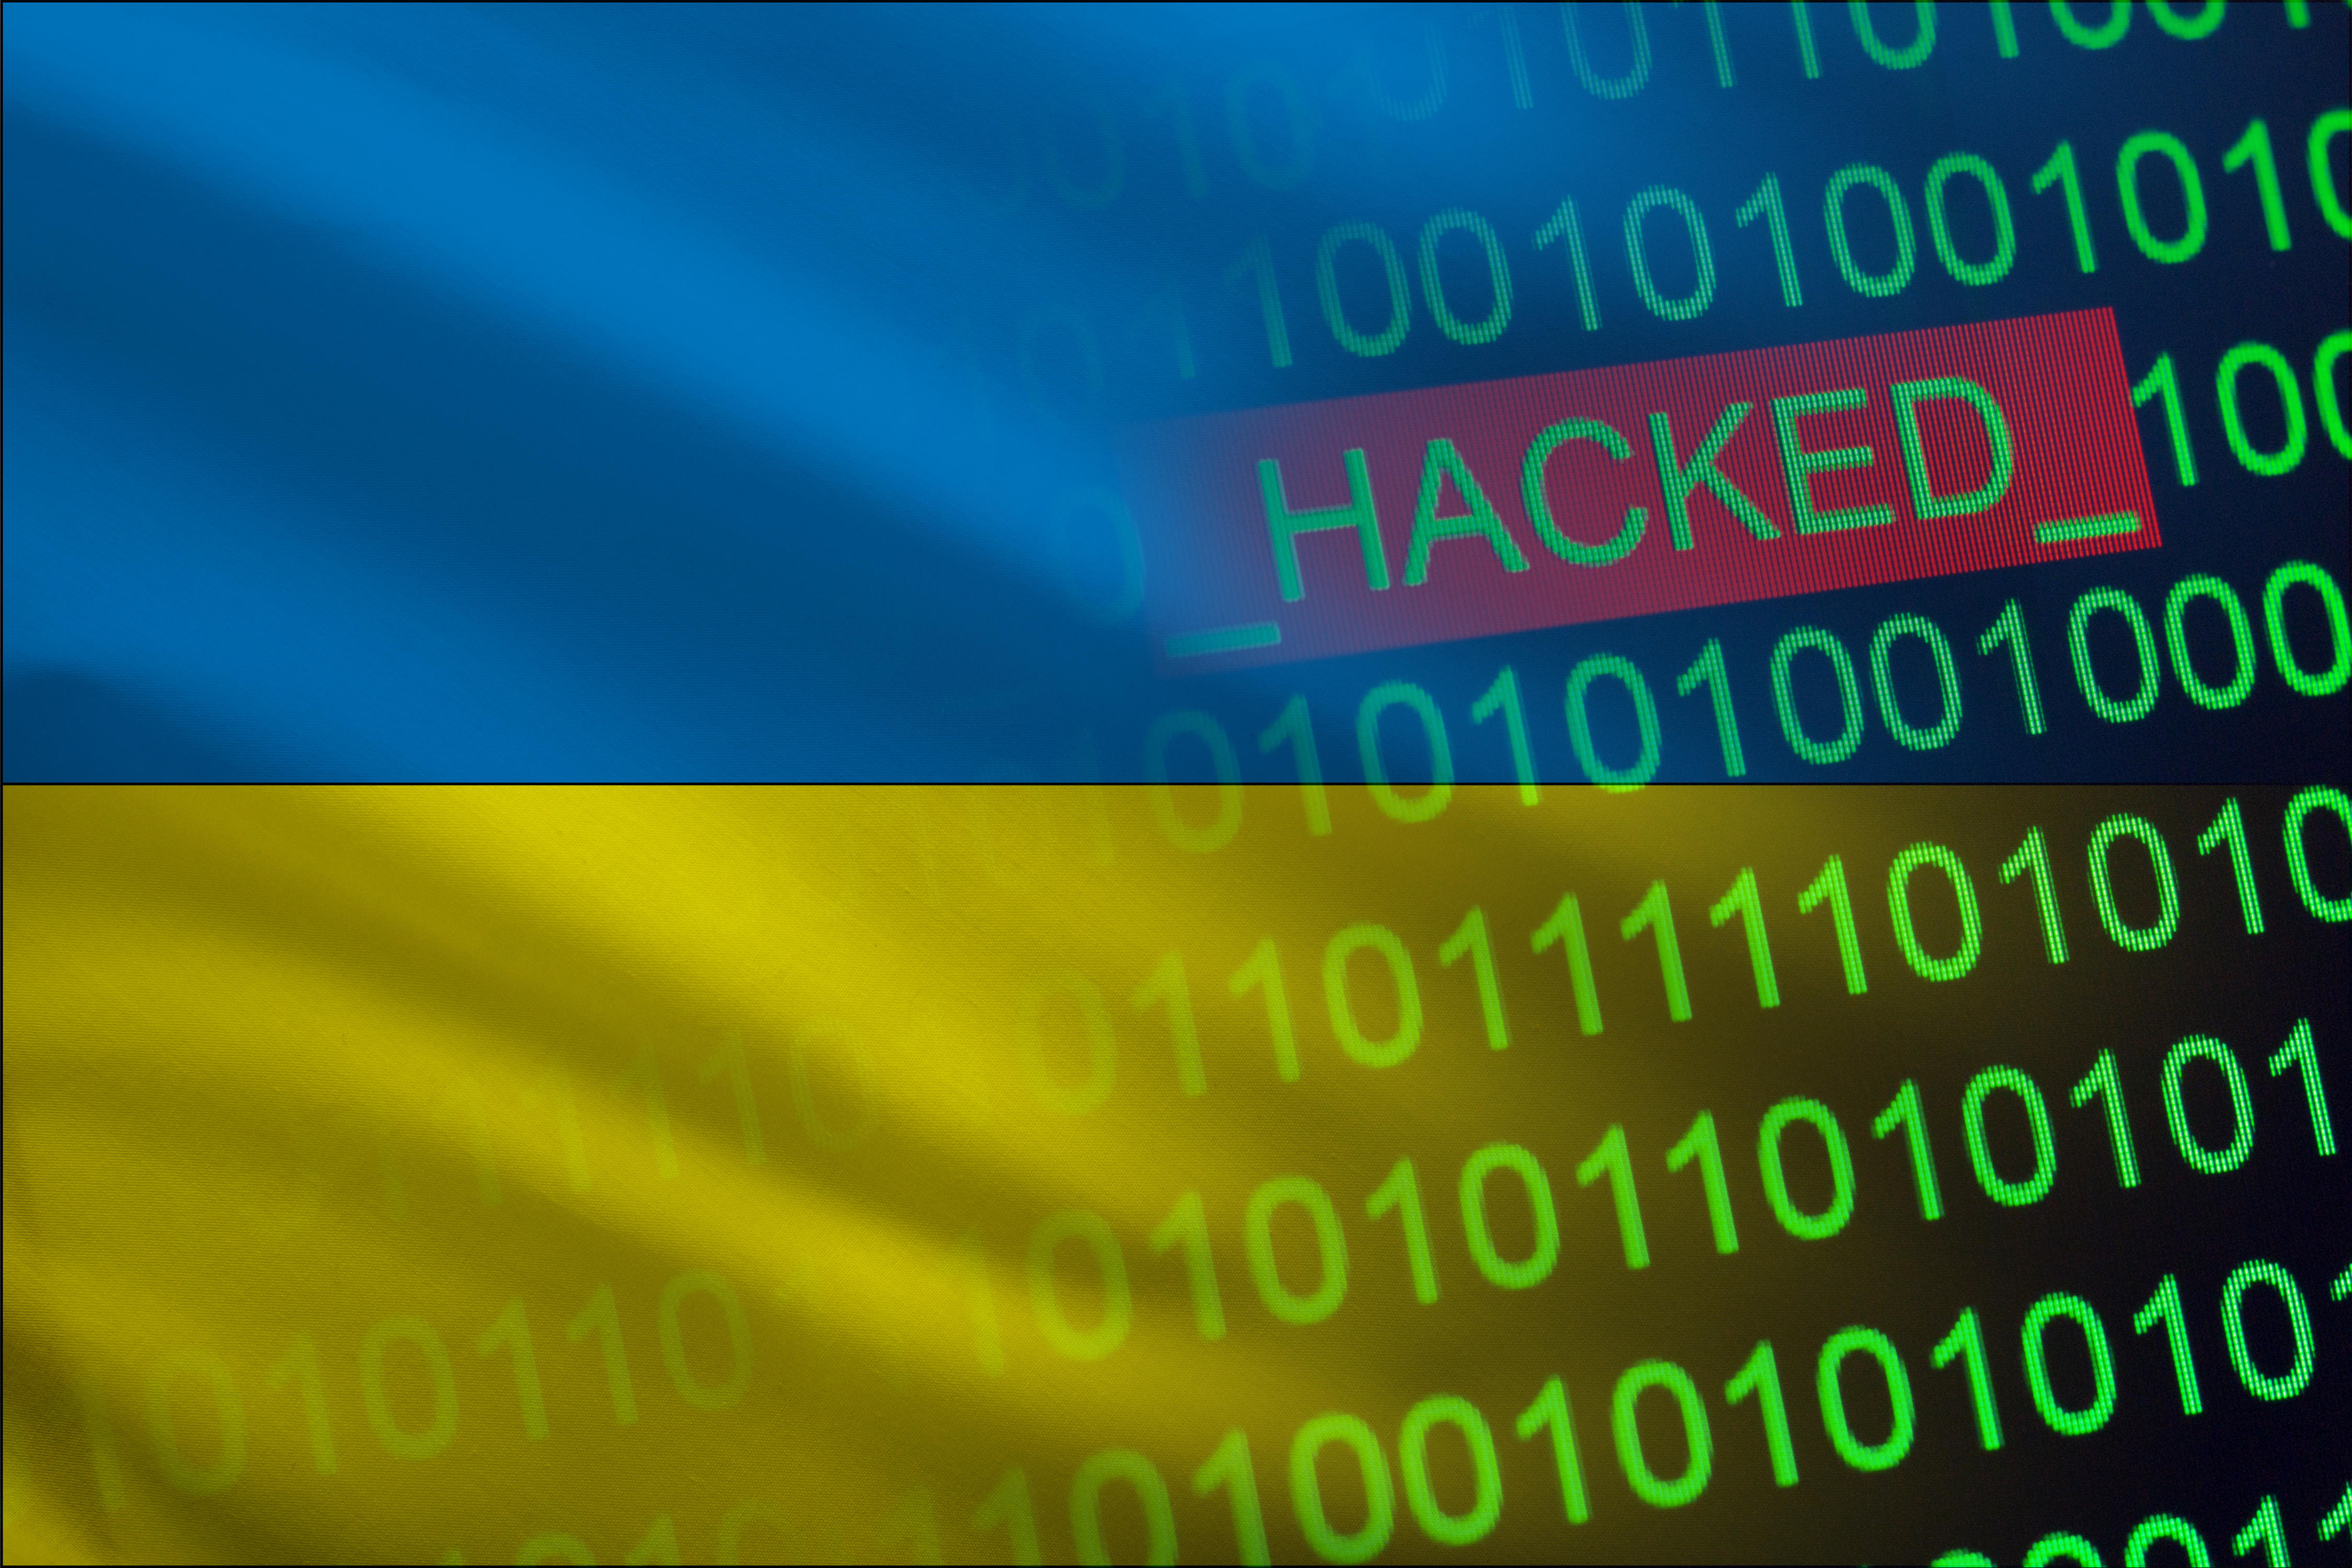 From Dark Reading – Series of Cyberattacks Hit Ukrainian Critical Infrastructure Organizations